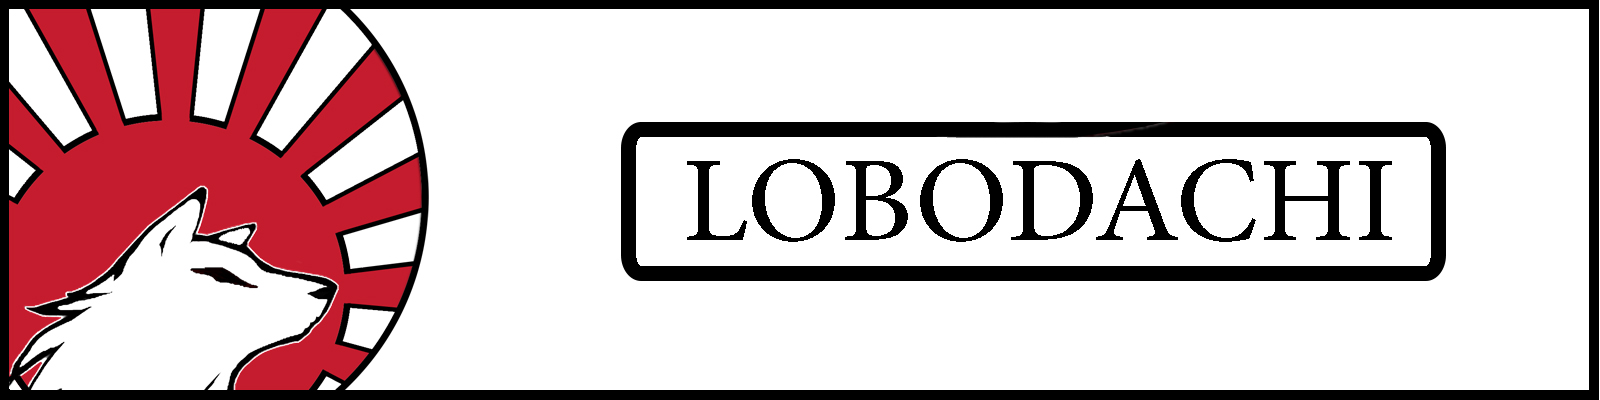 Lobodachi